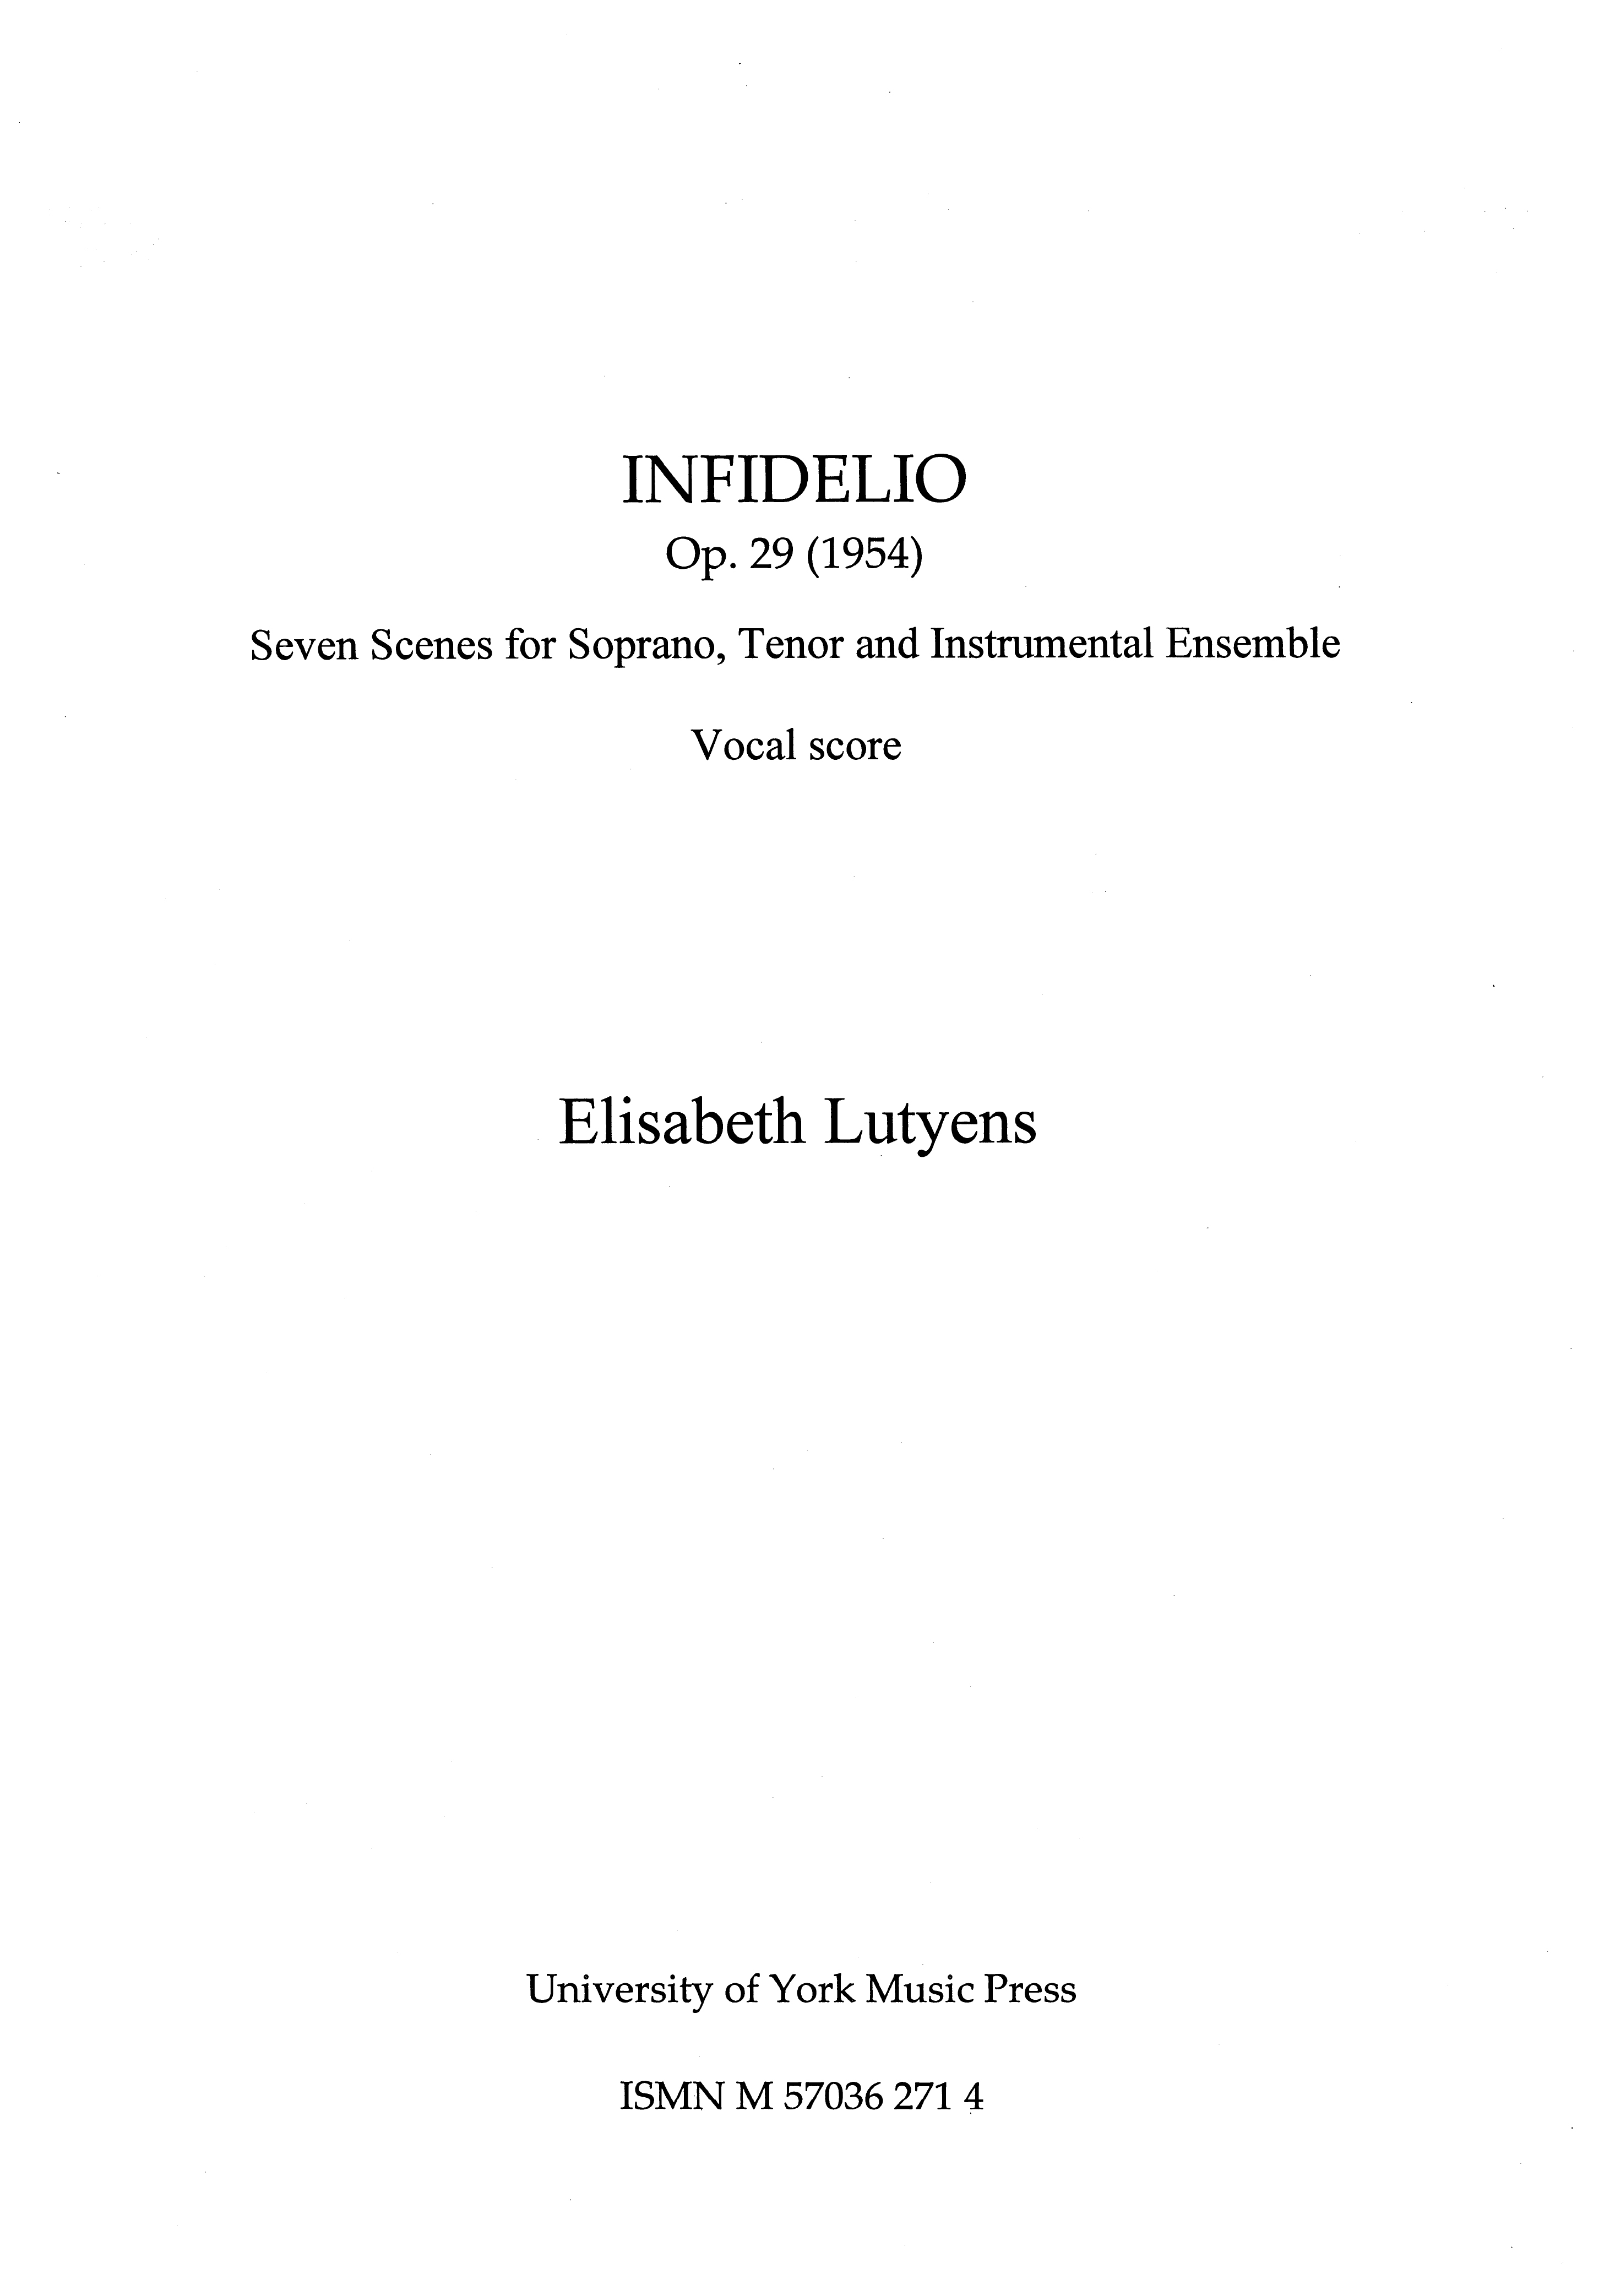 Elisabeth Lutyens: Infidelio Op.29: Chamber Ensemble: Vocal Score